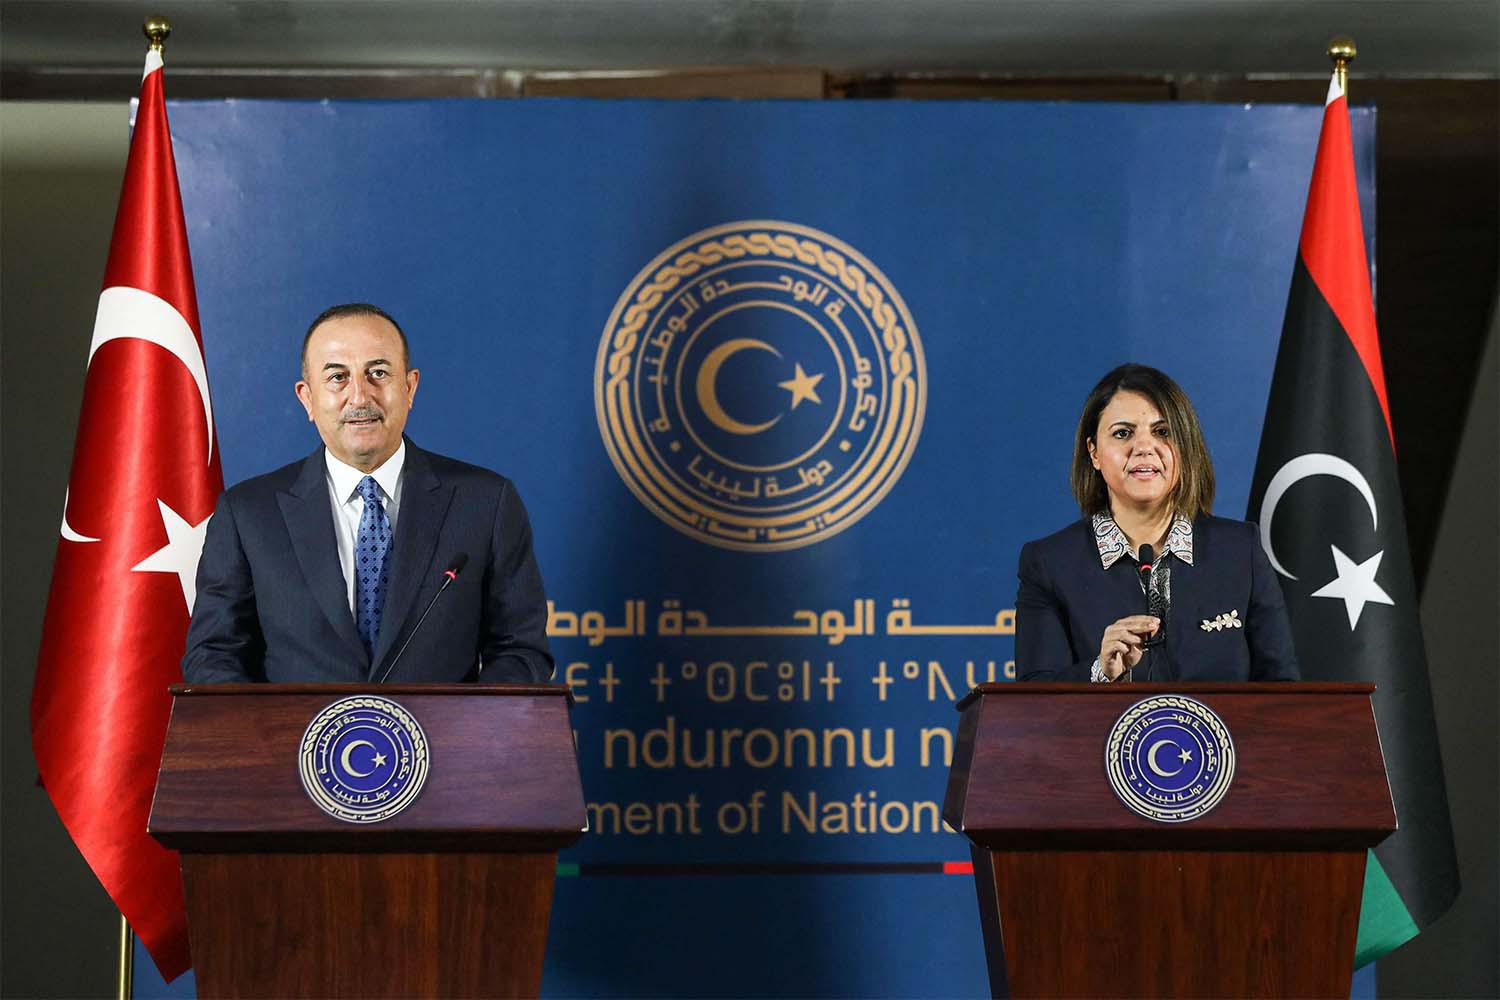 Libya's Foreign Minister Najla al-Manqoush and Turkish counterpart Mevlut Cavusoglu